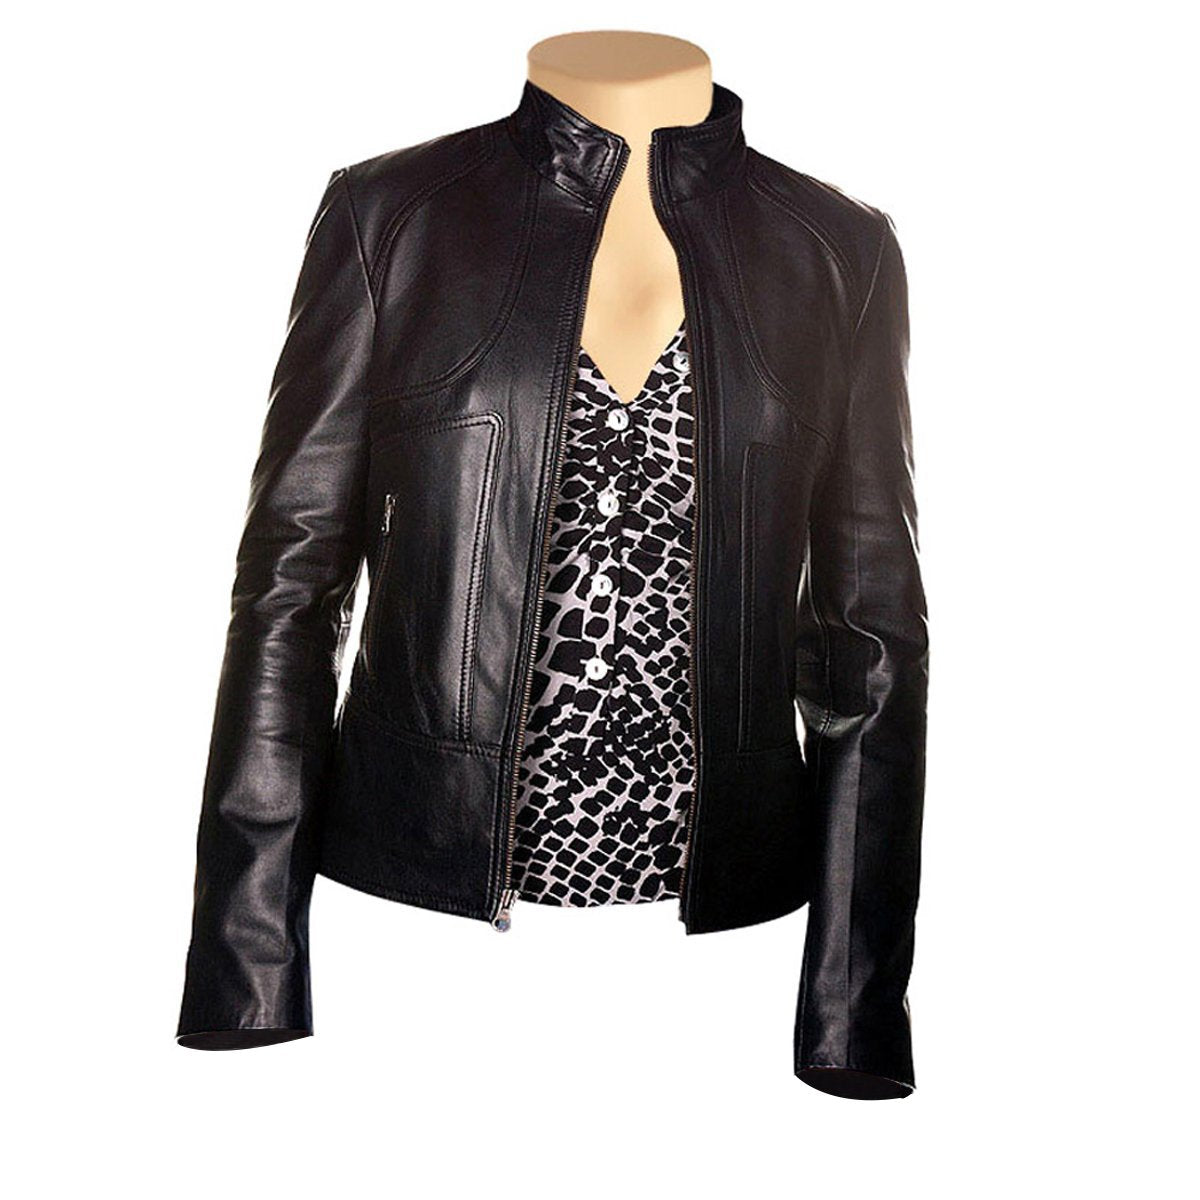 Fashionable Maria's Front-Zip Black Leather Jacket